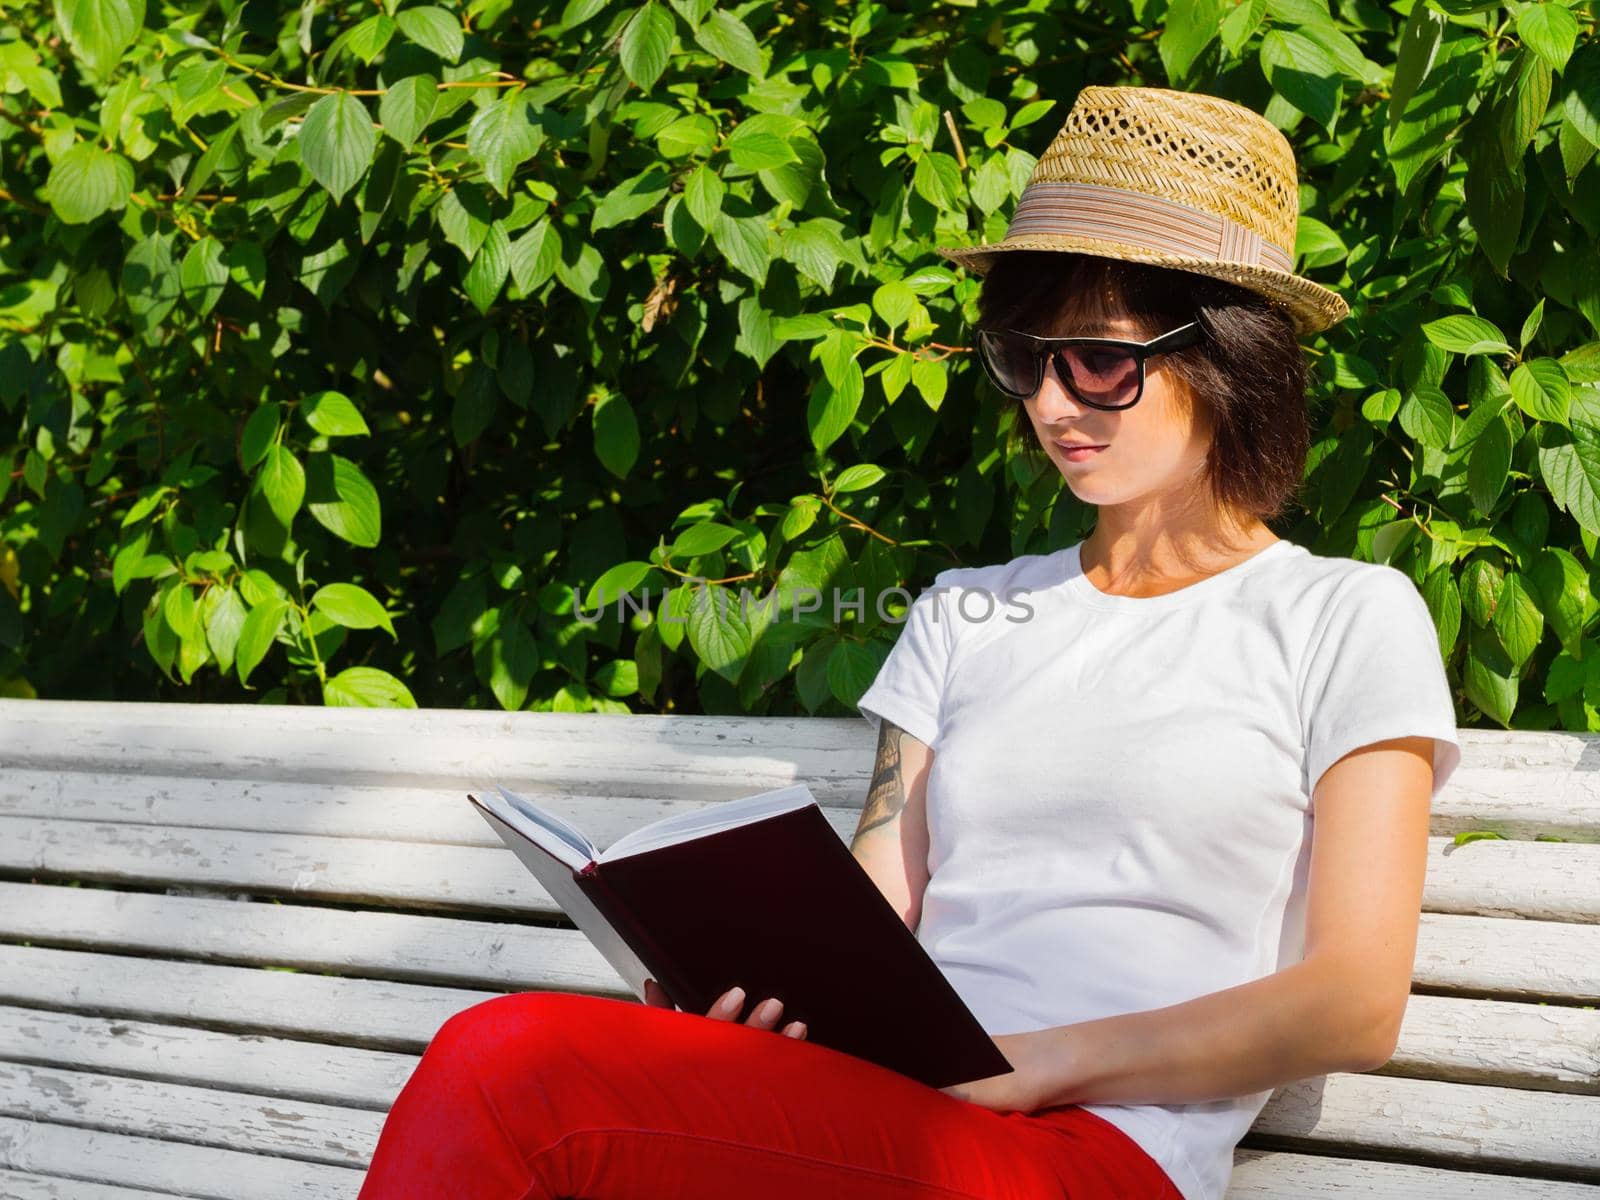 Reading in the summer garden by alexAleksei